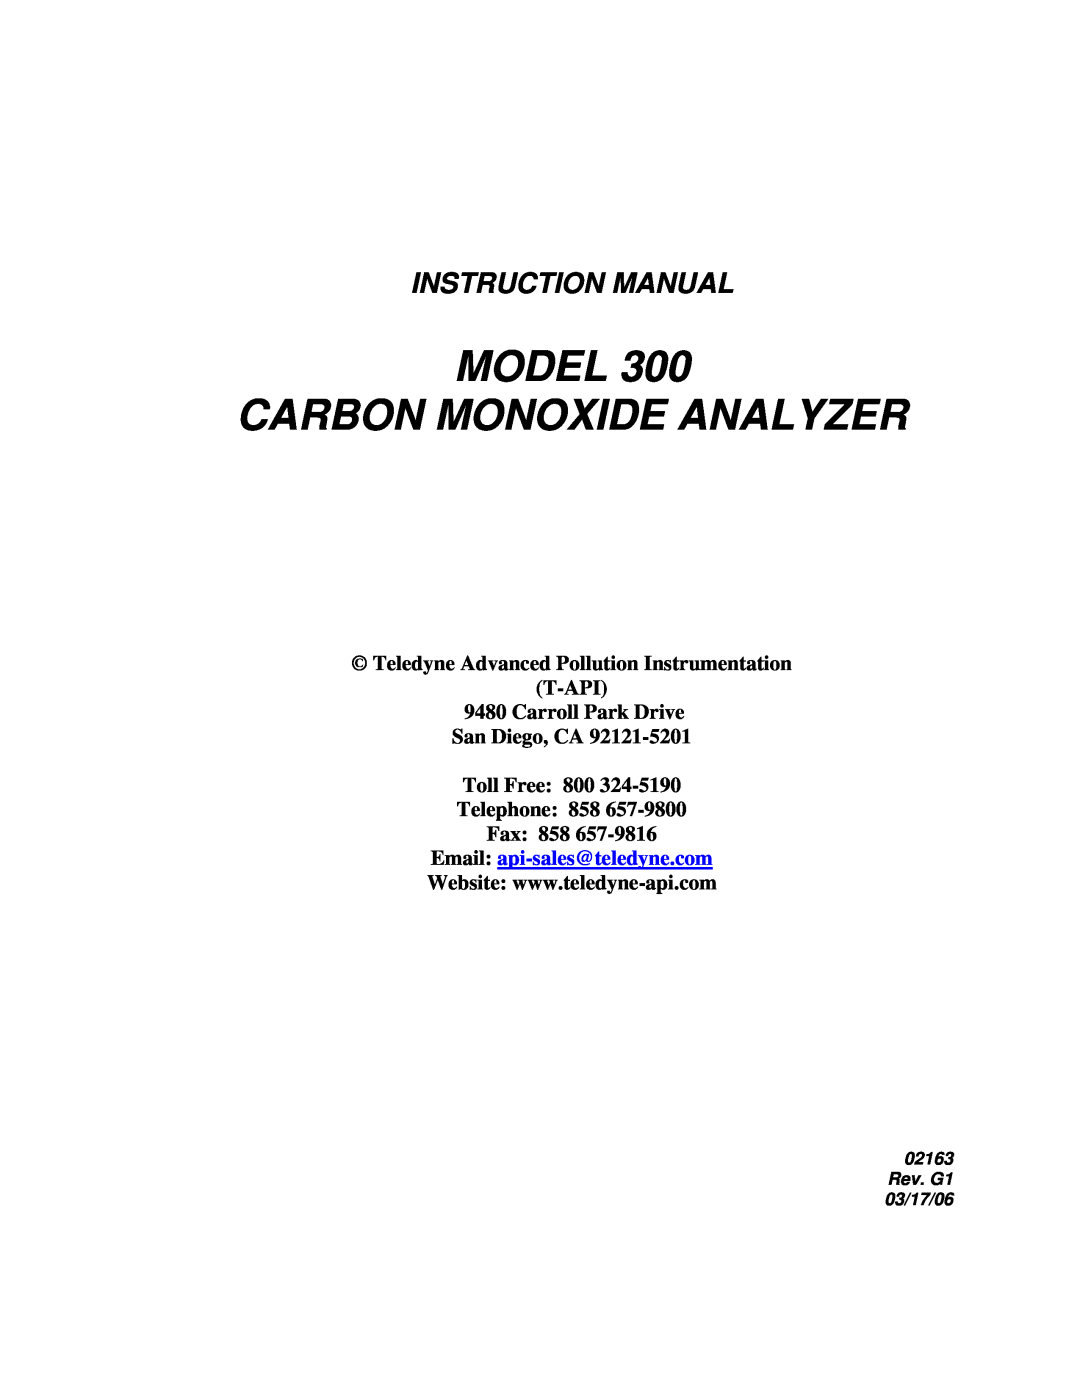 Teledyne 300 instruction manual Model Carbon Monoxide Analyzer, Teledyne Advanced Pollution Instrumentation T-API 